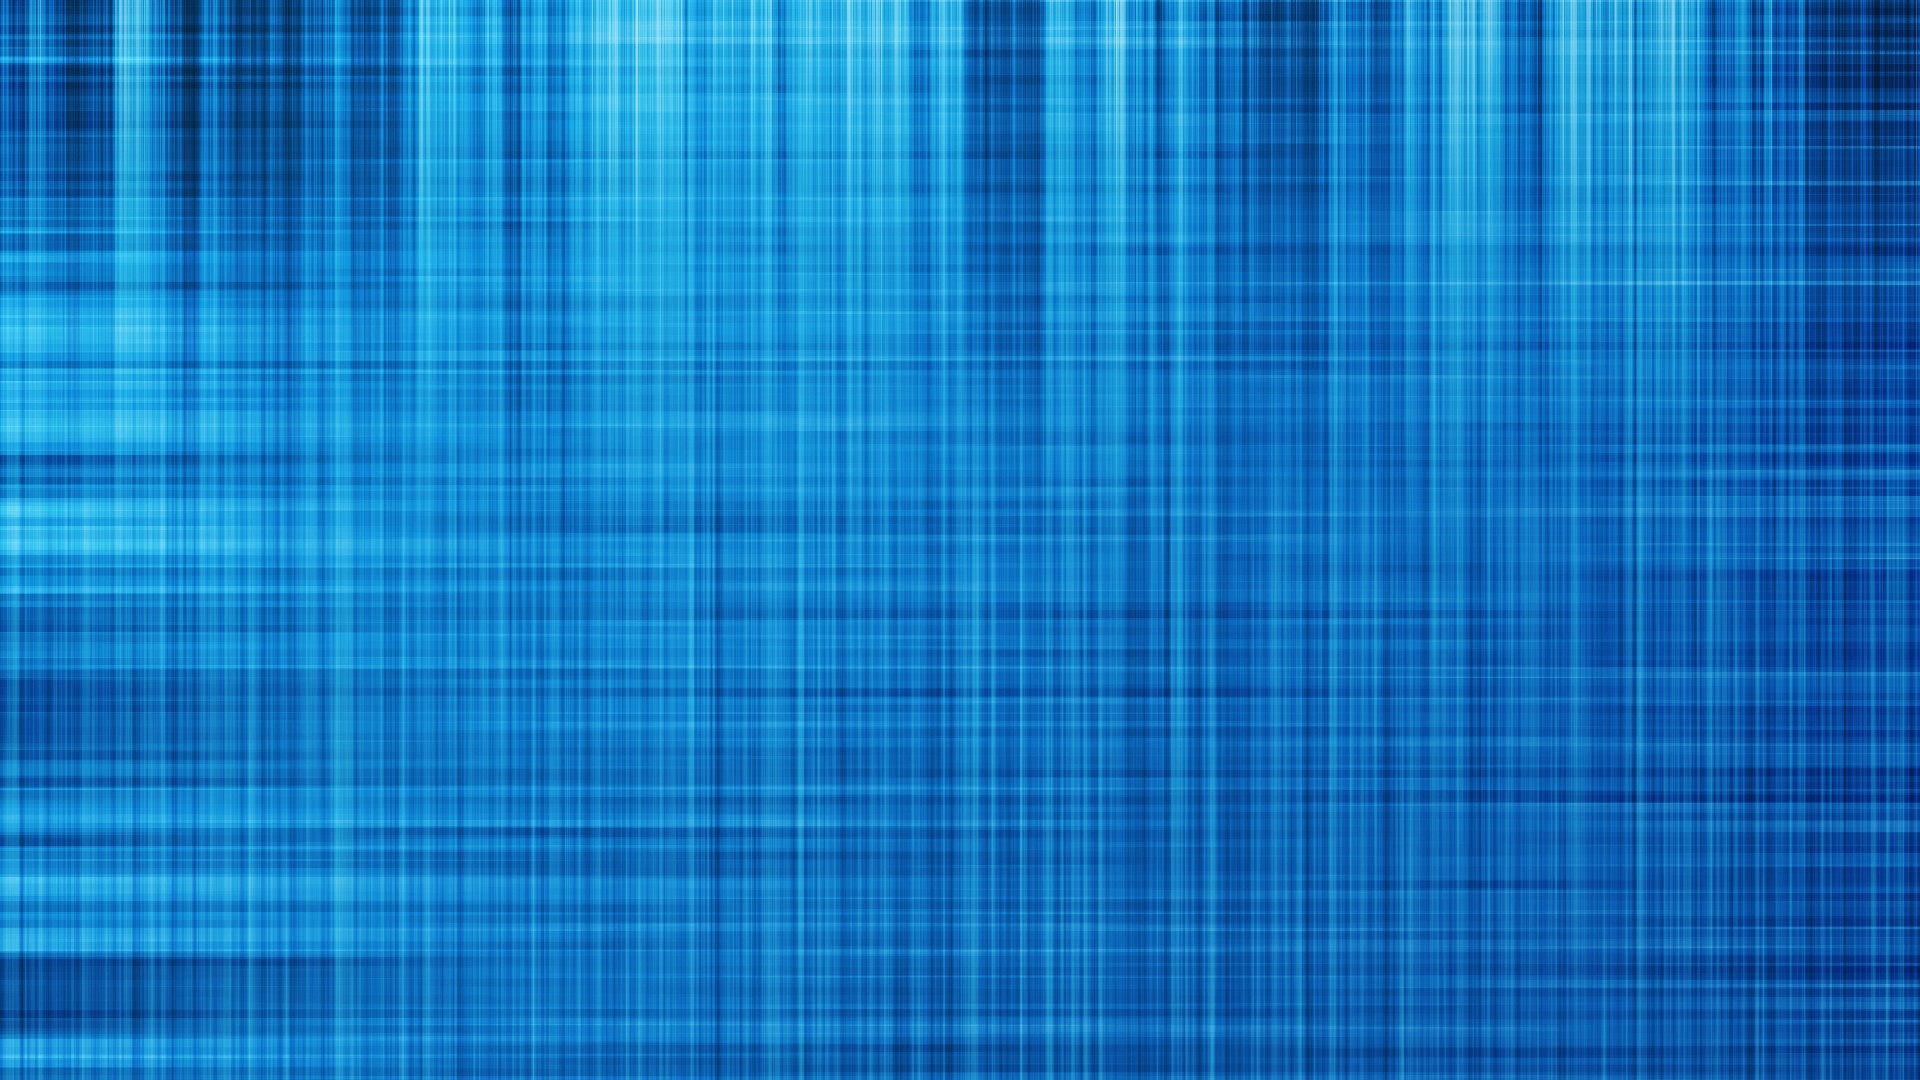 Download 88 Koleksi Background Blue Wallpaper Hd Gratis Terbaru